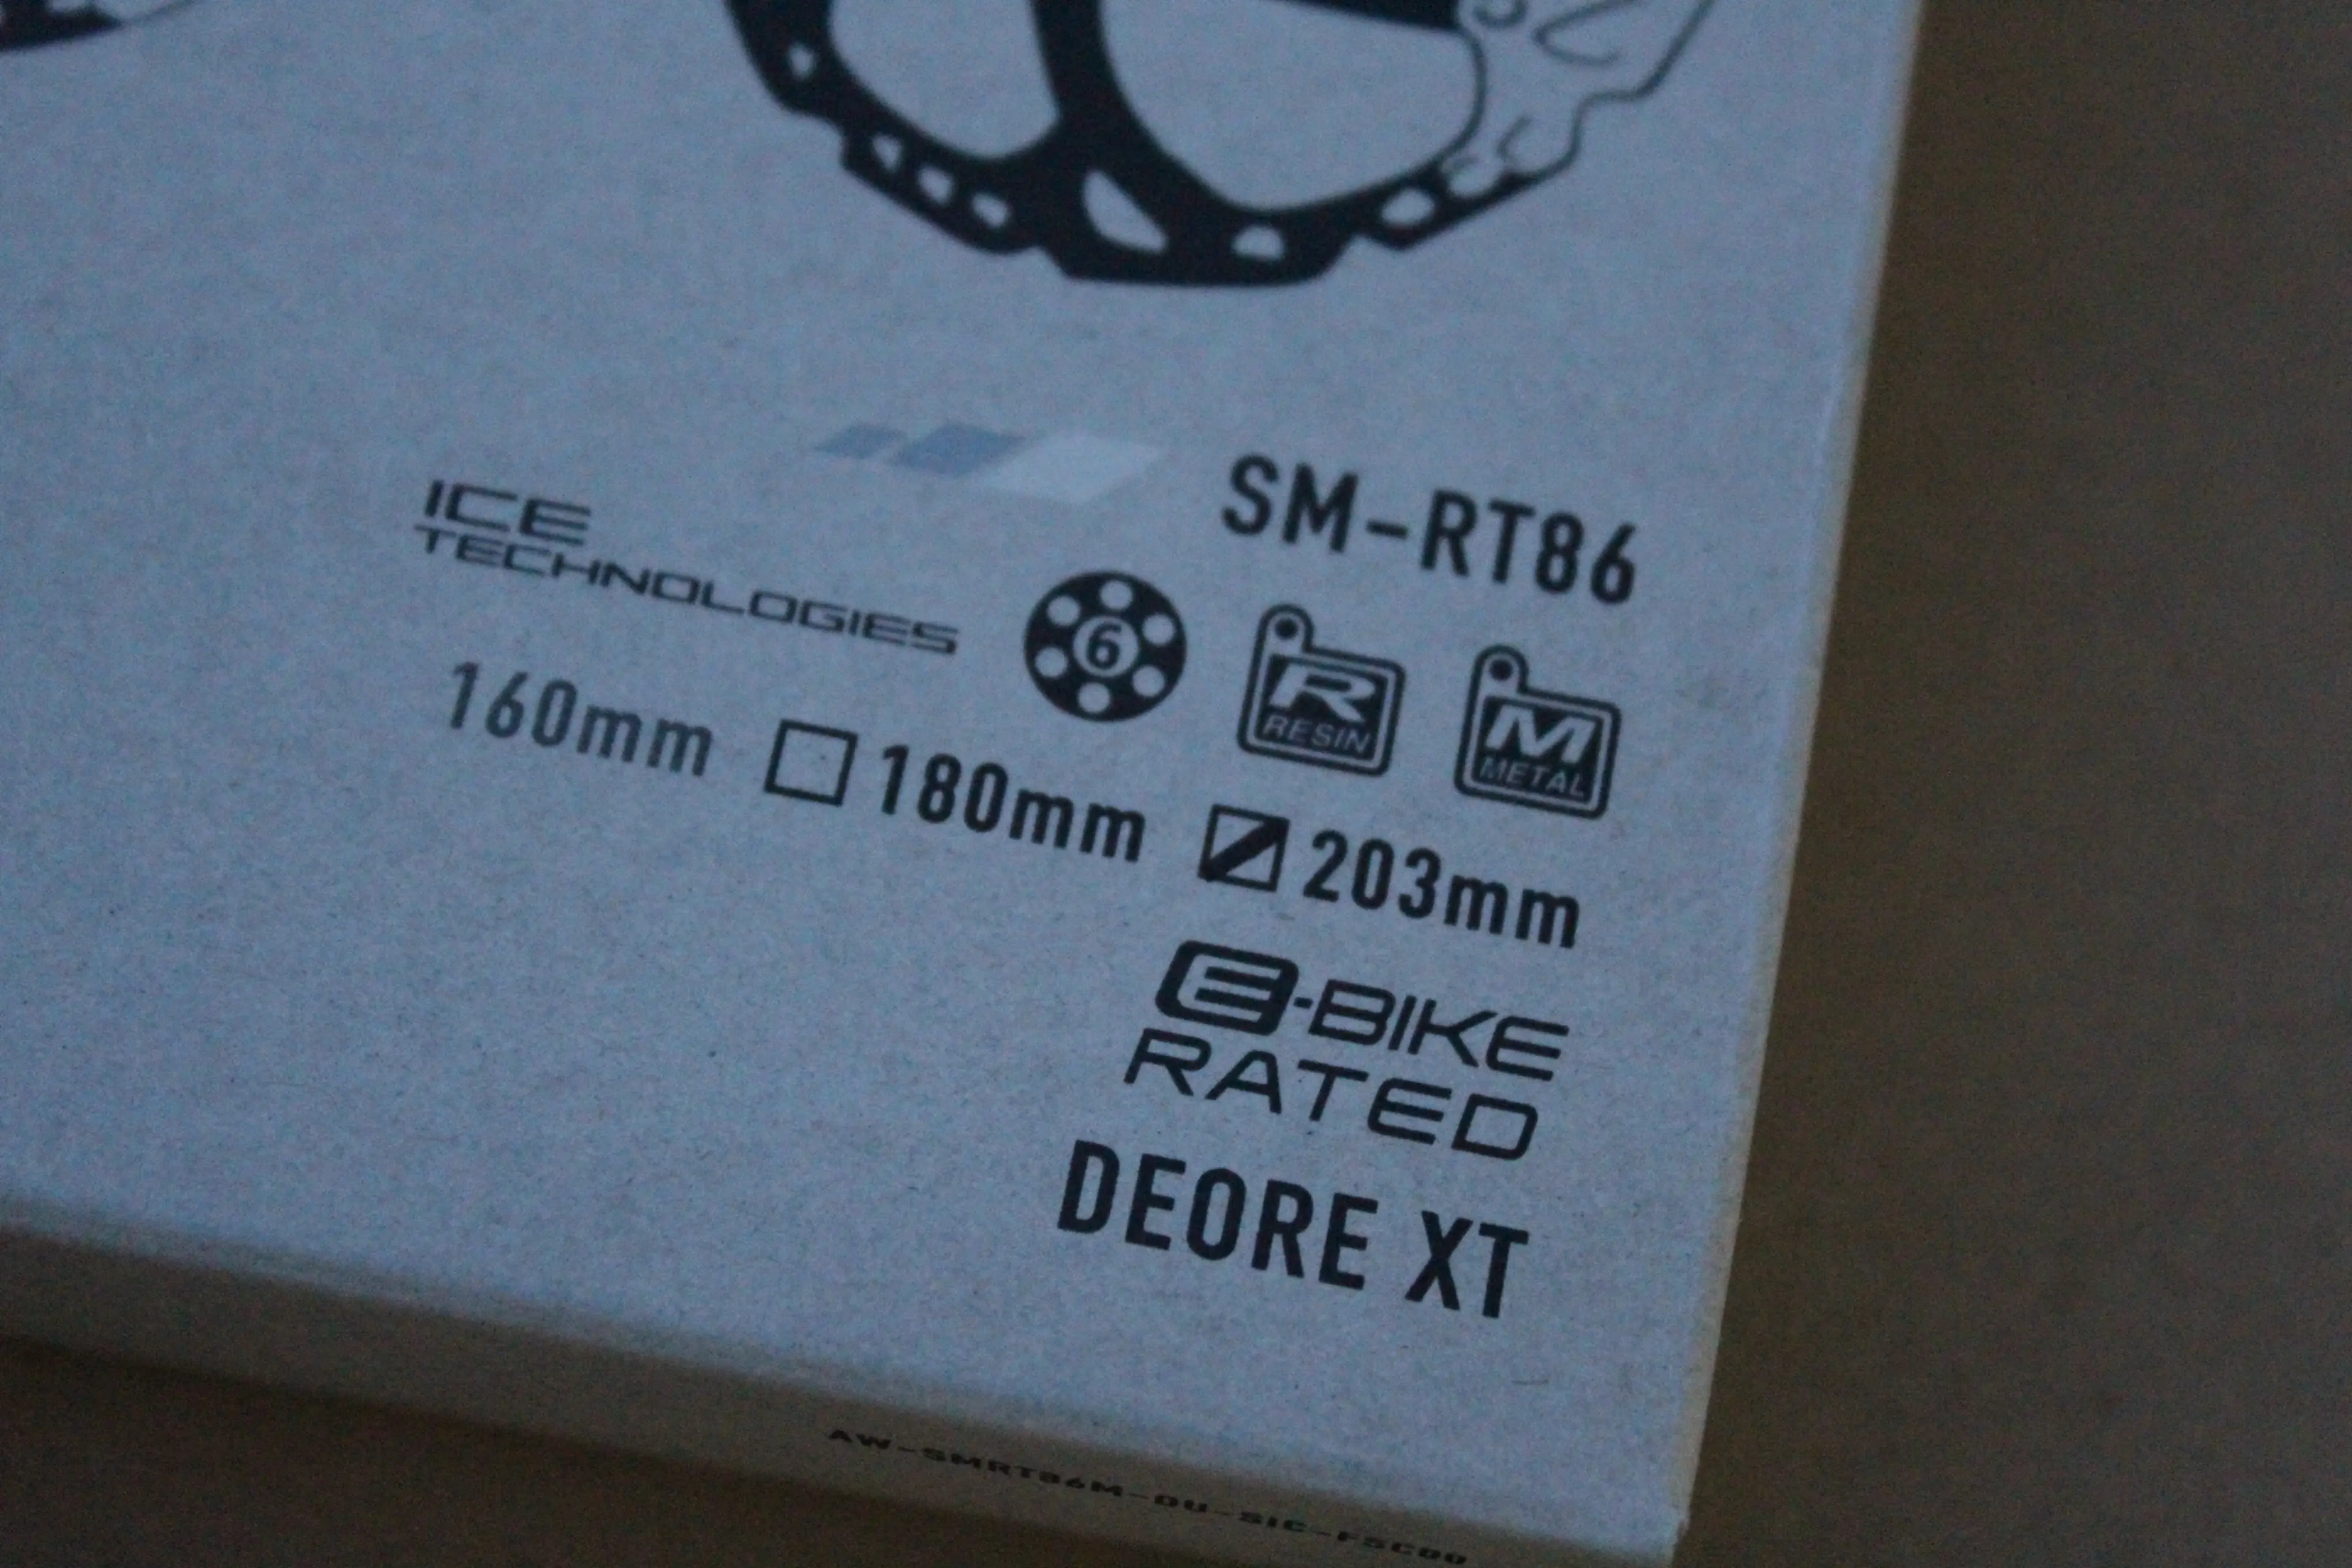 7. Shimano SM-RT86 XT Ice Technology - 203mm disc rotor